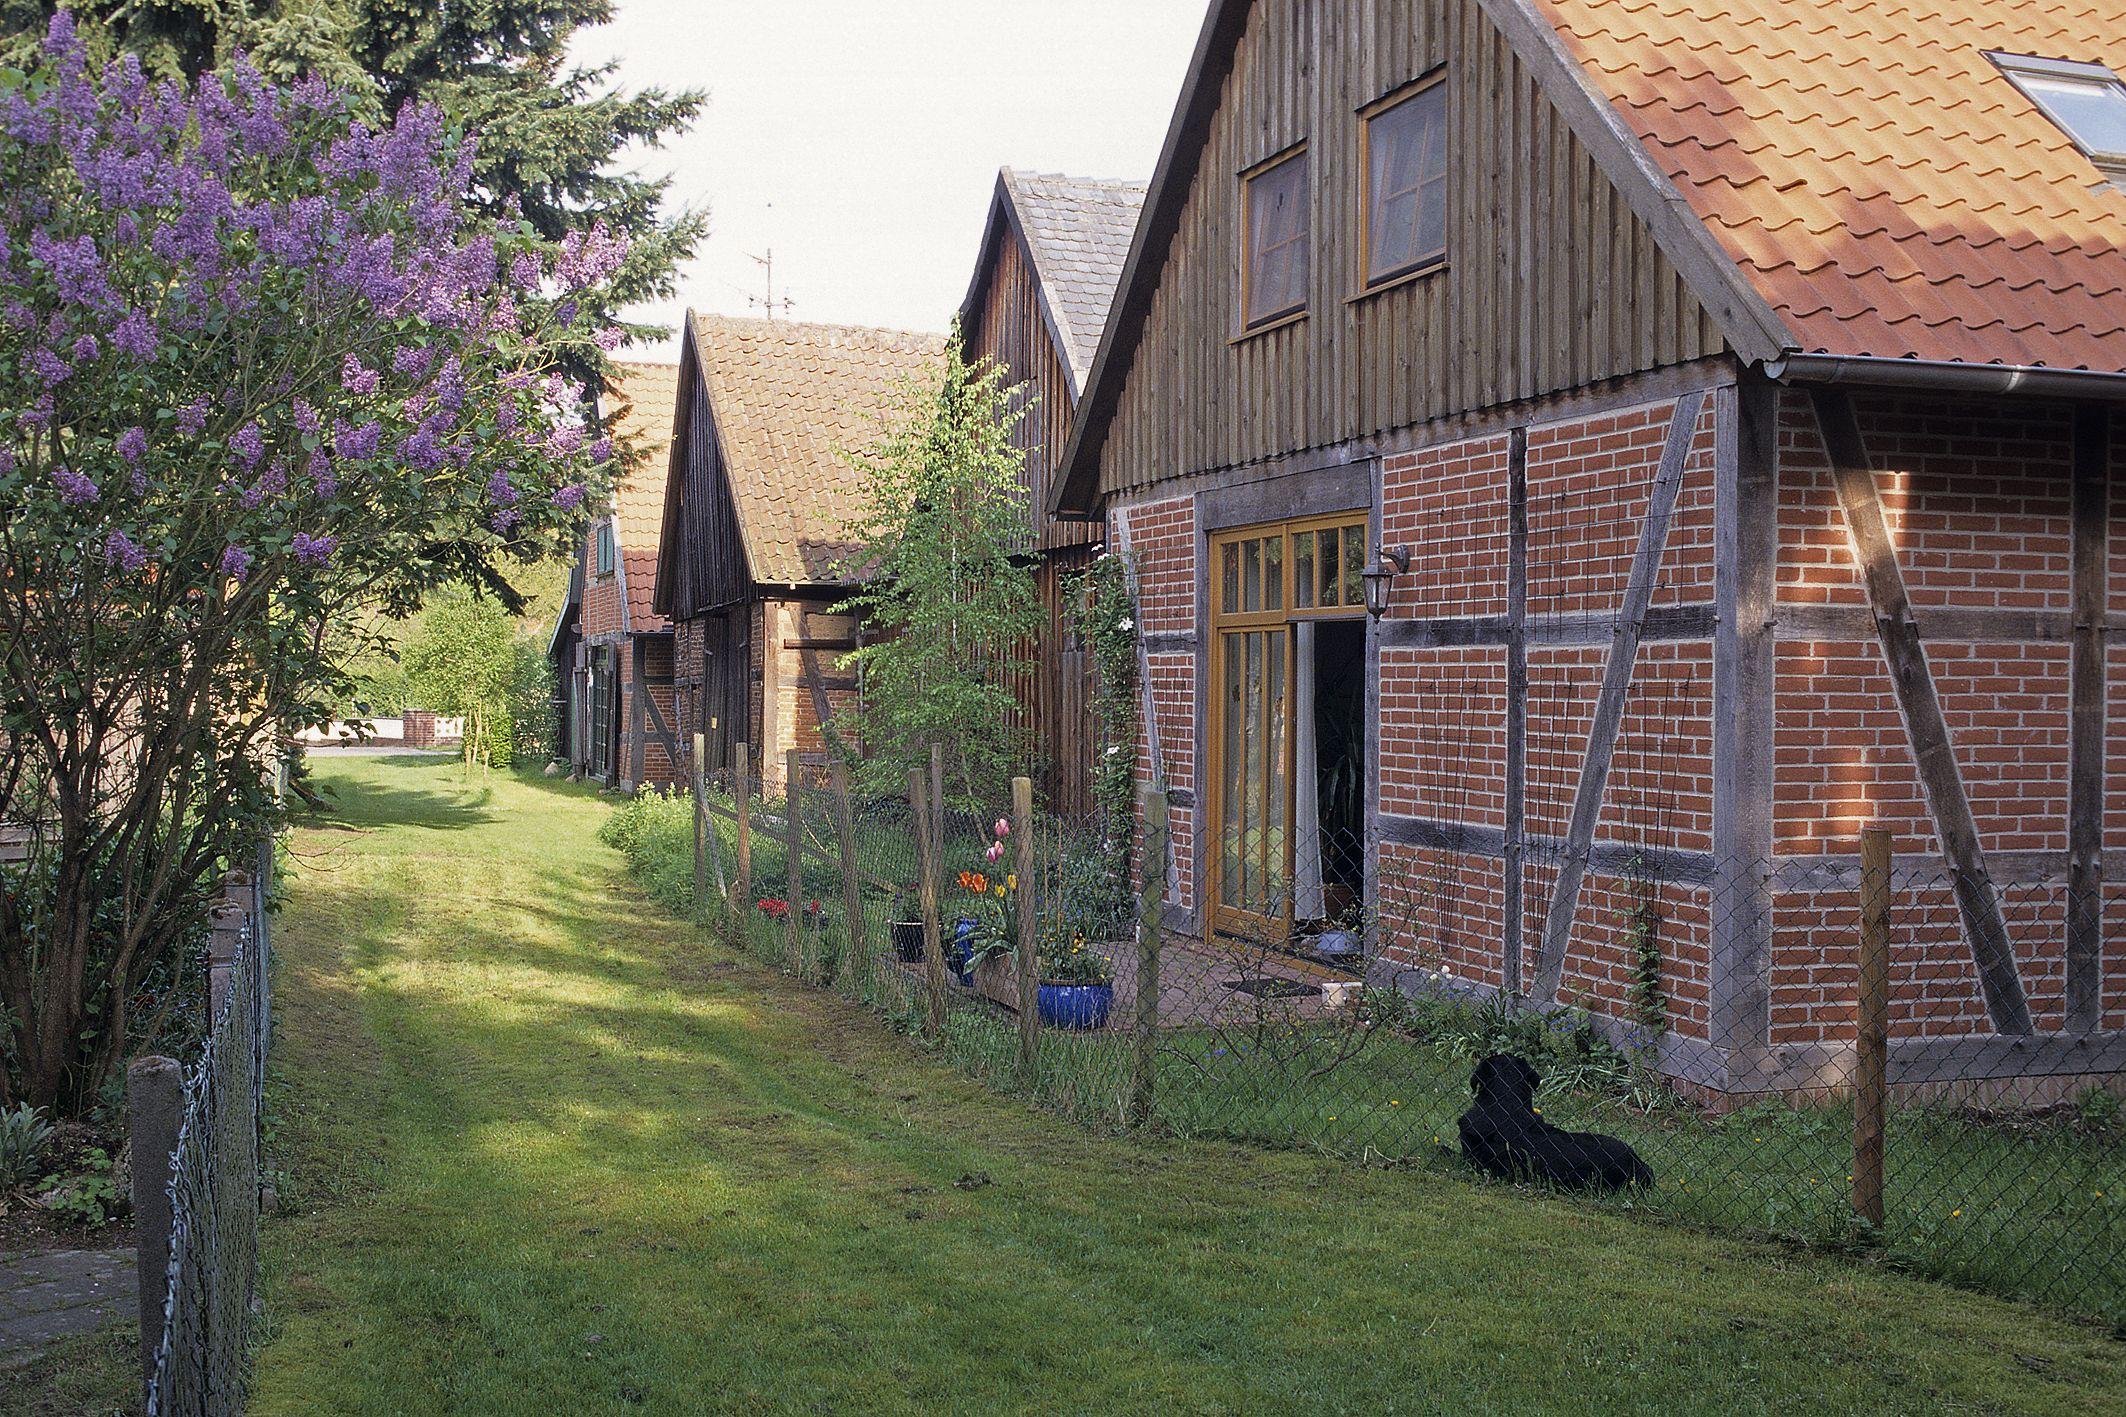 Ahlden Scheunenviertel – the barn district